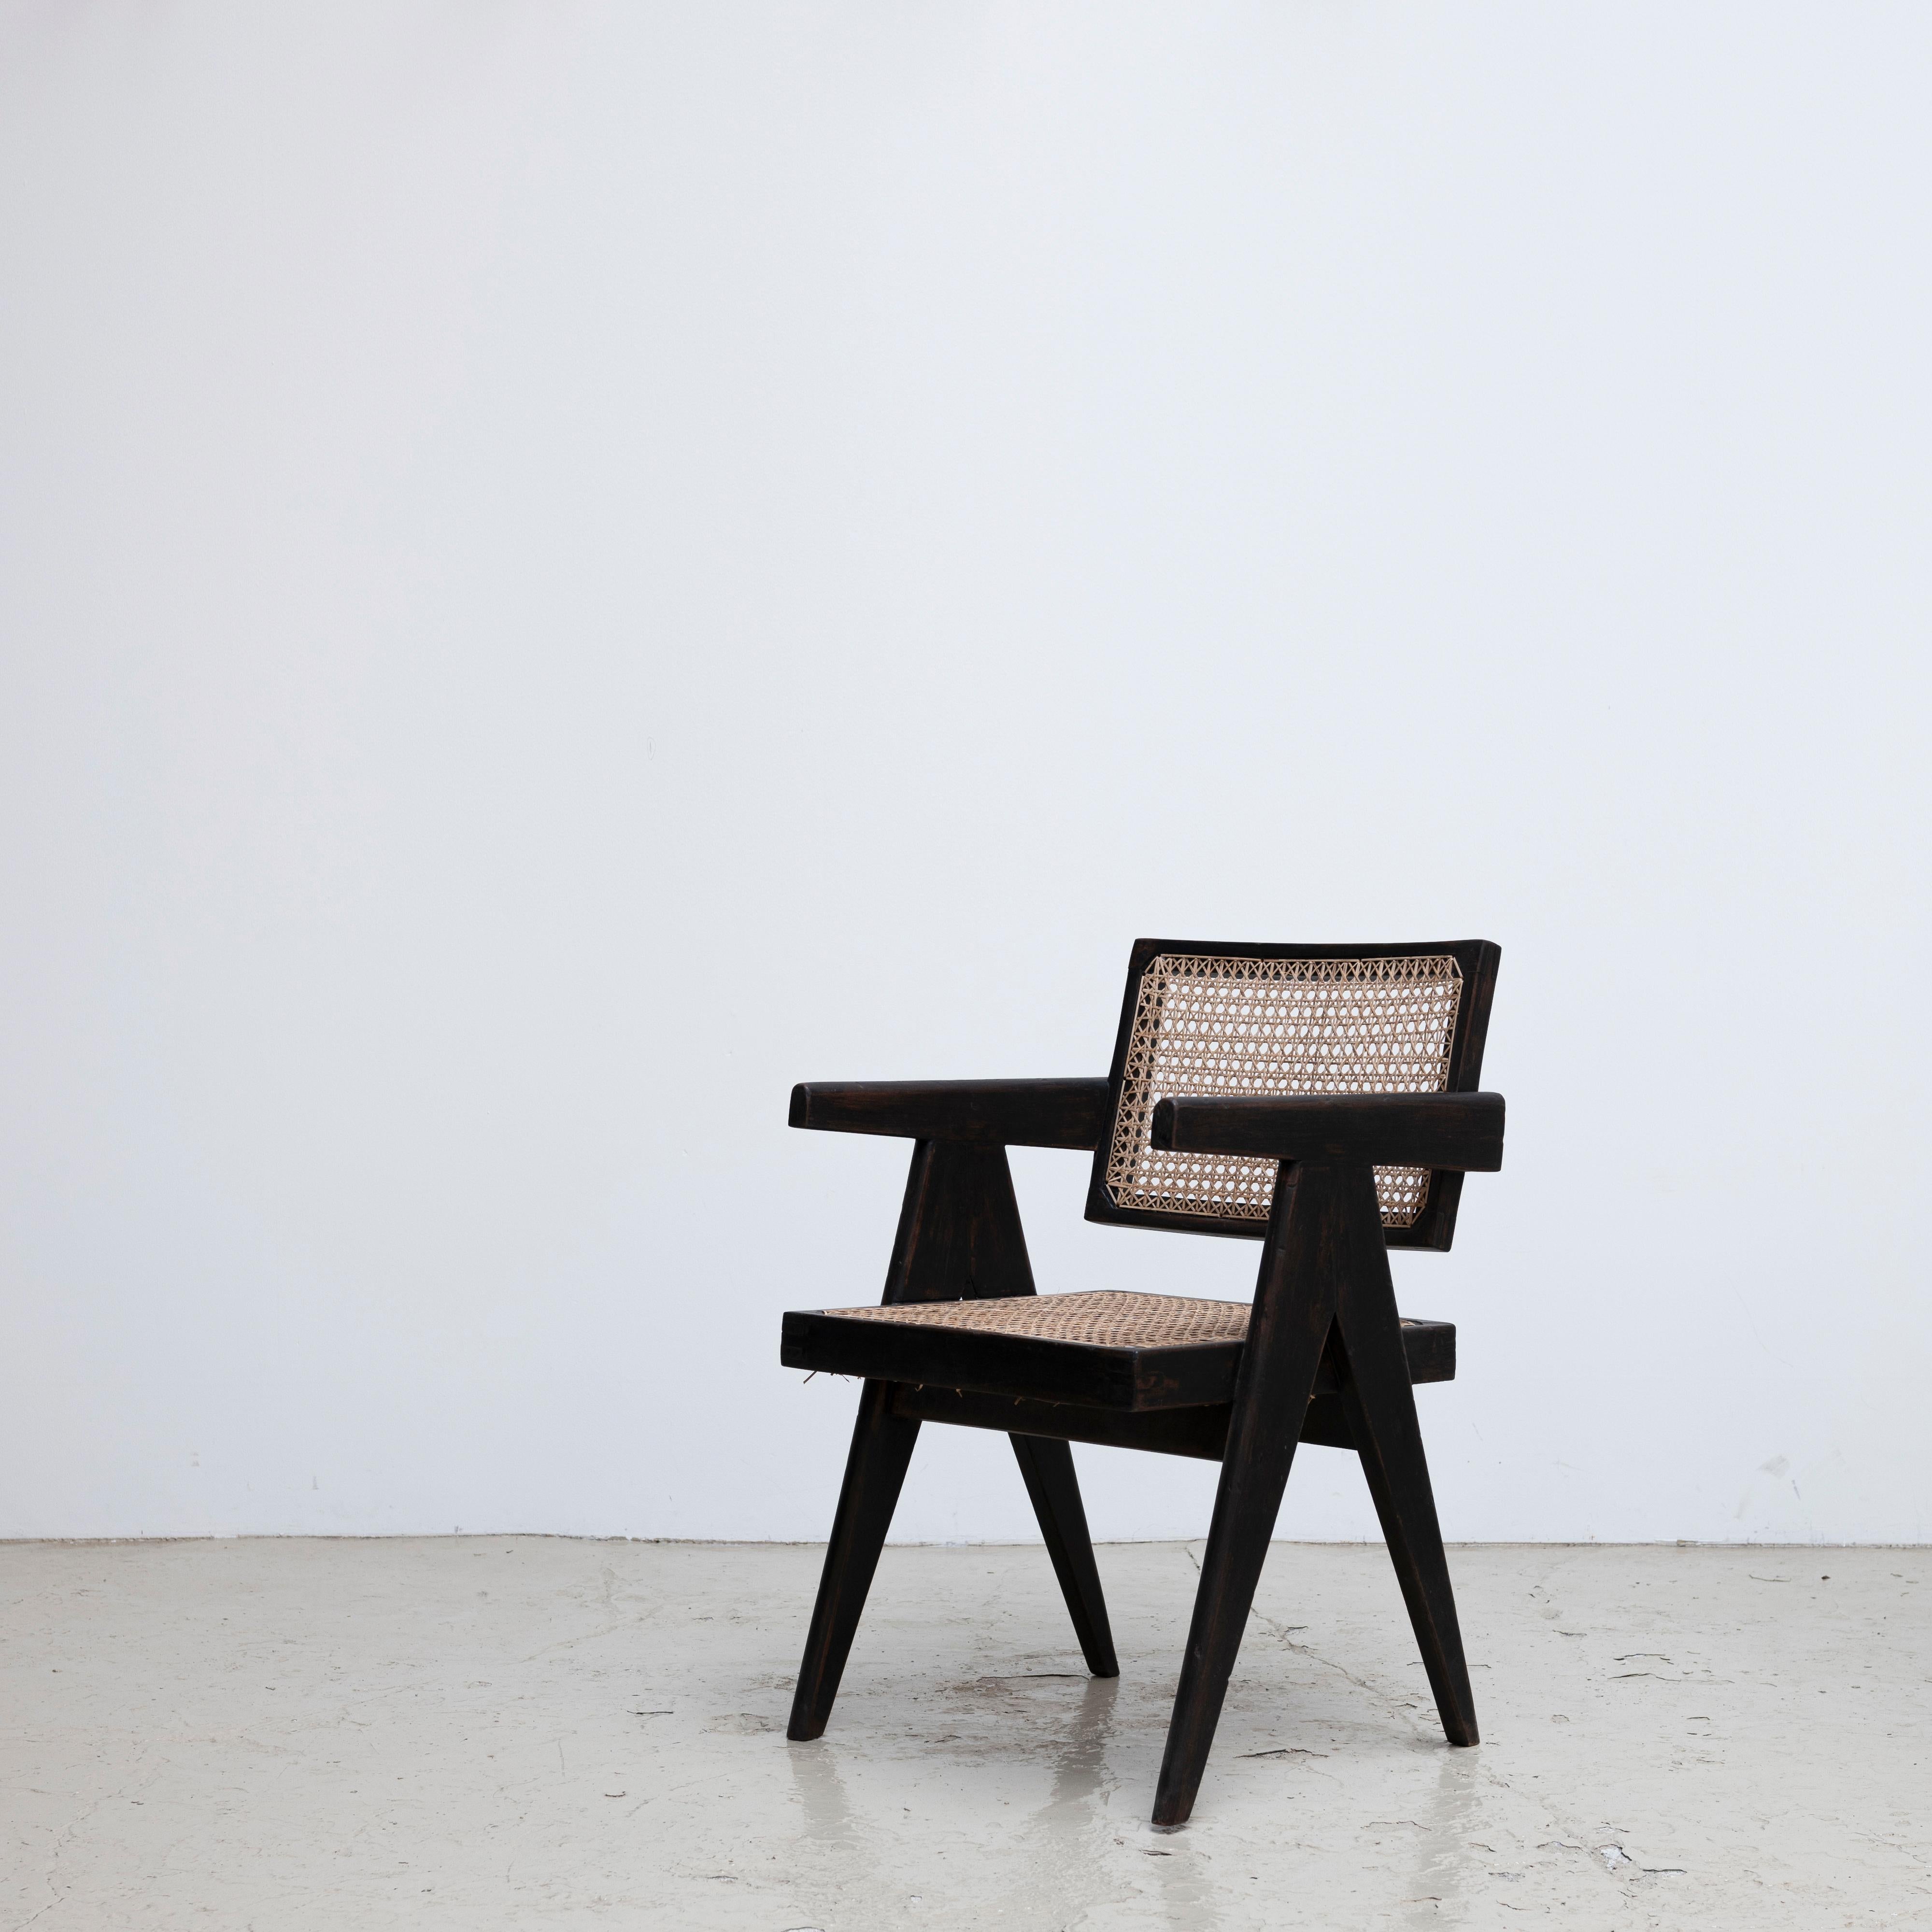 Rare black floating back office chair designed by Pierre Jeanneret.
Provenance: Punjab Agricultural University.